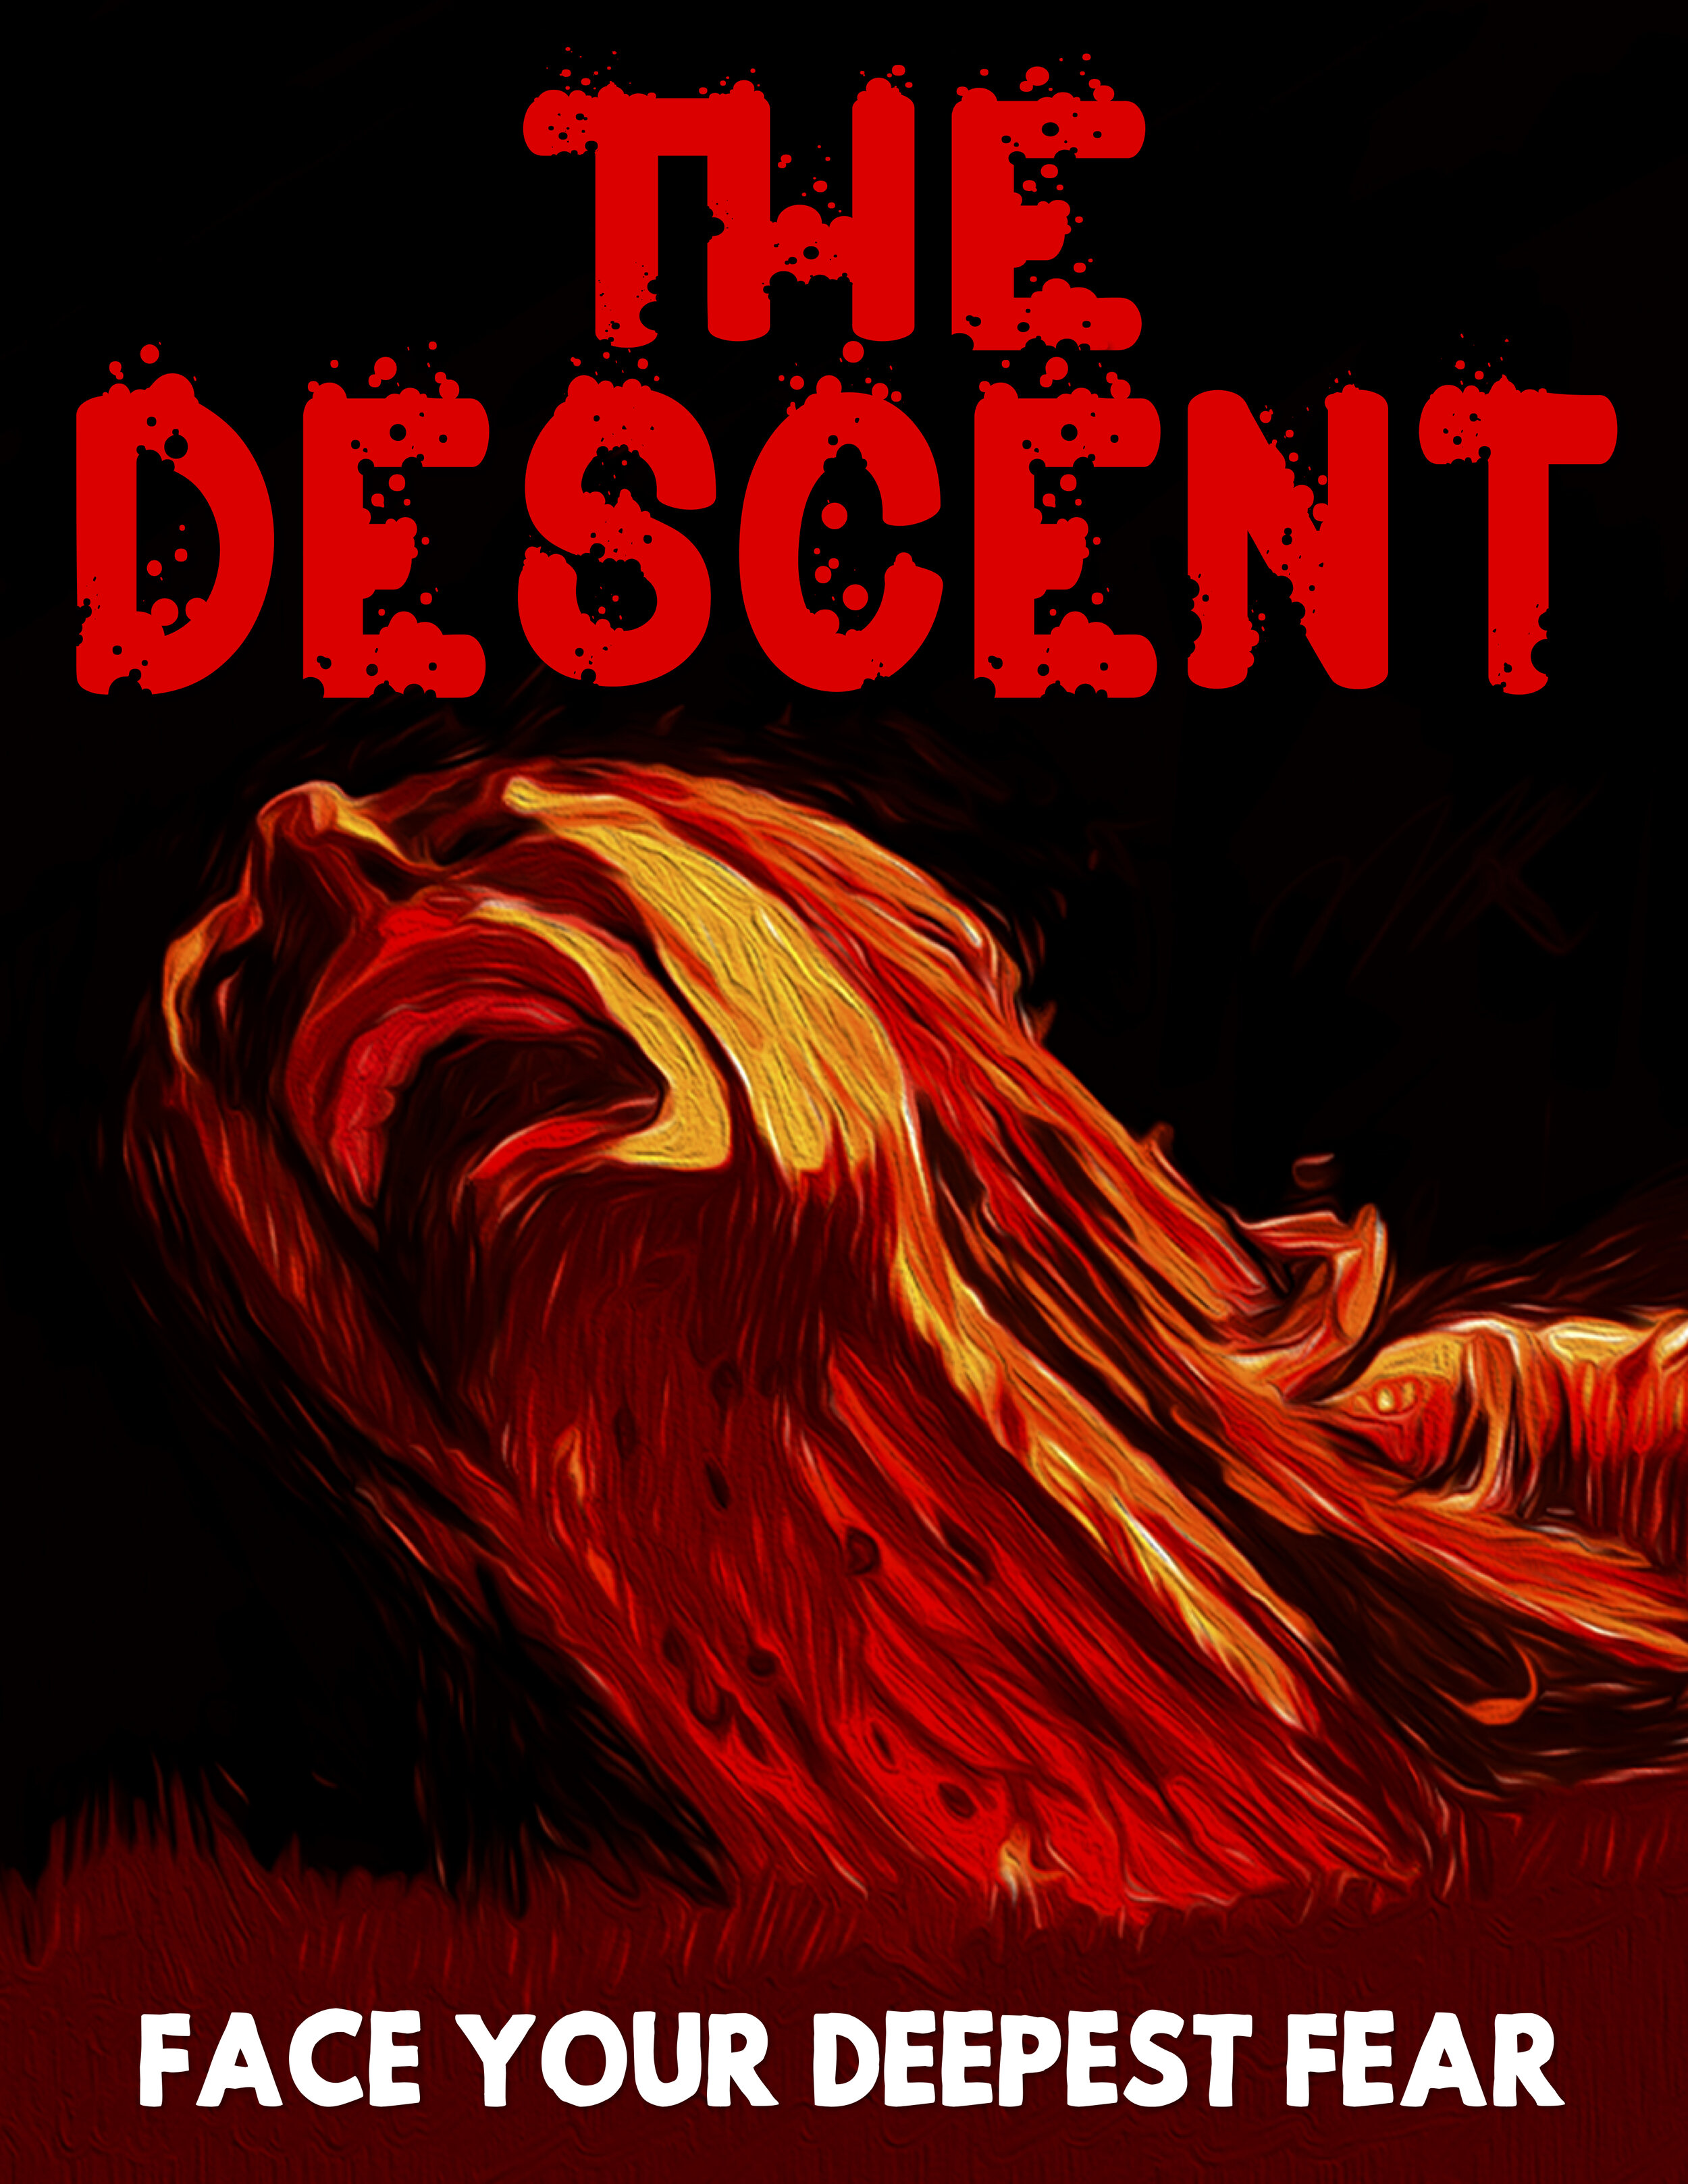 The Descent (2005)